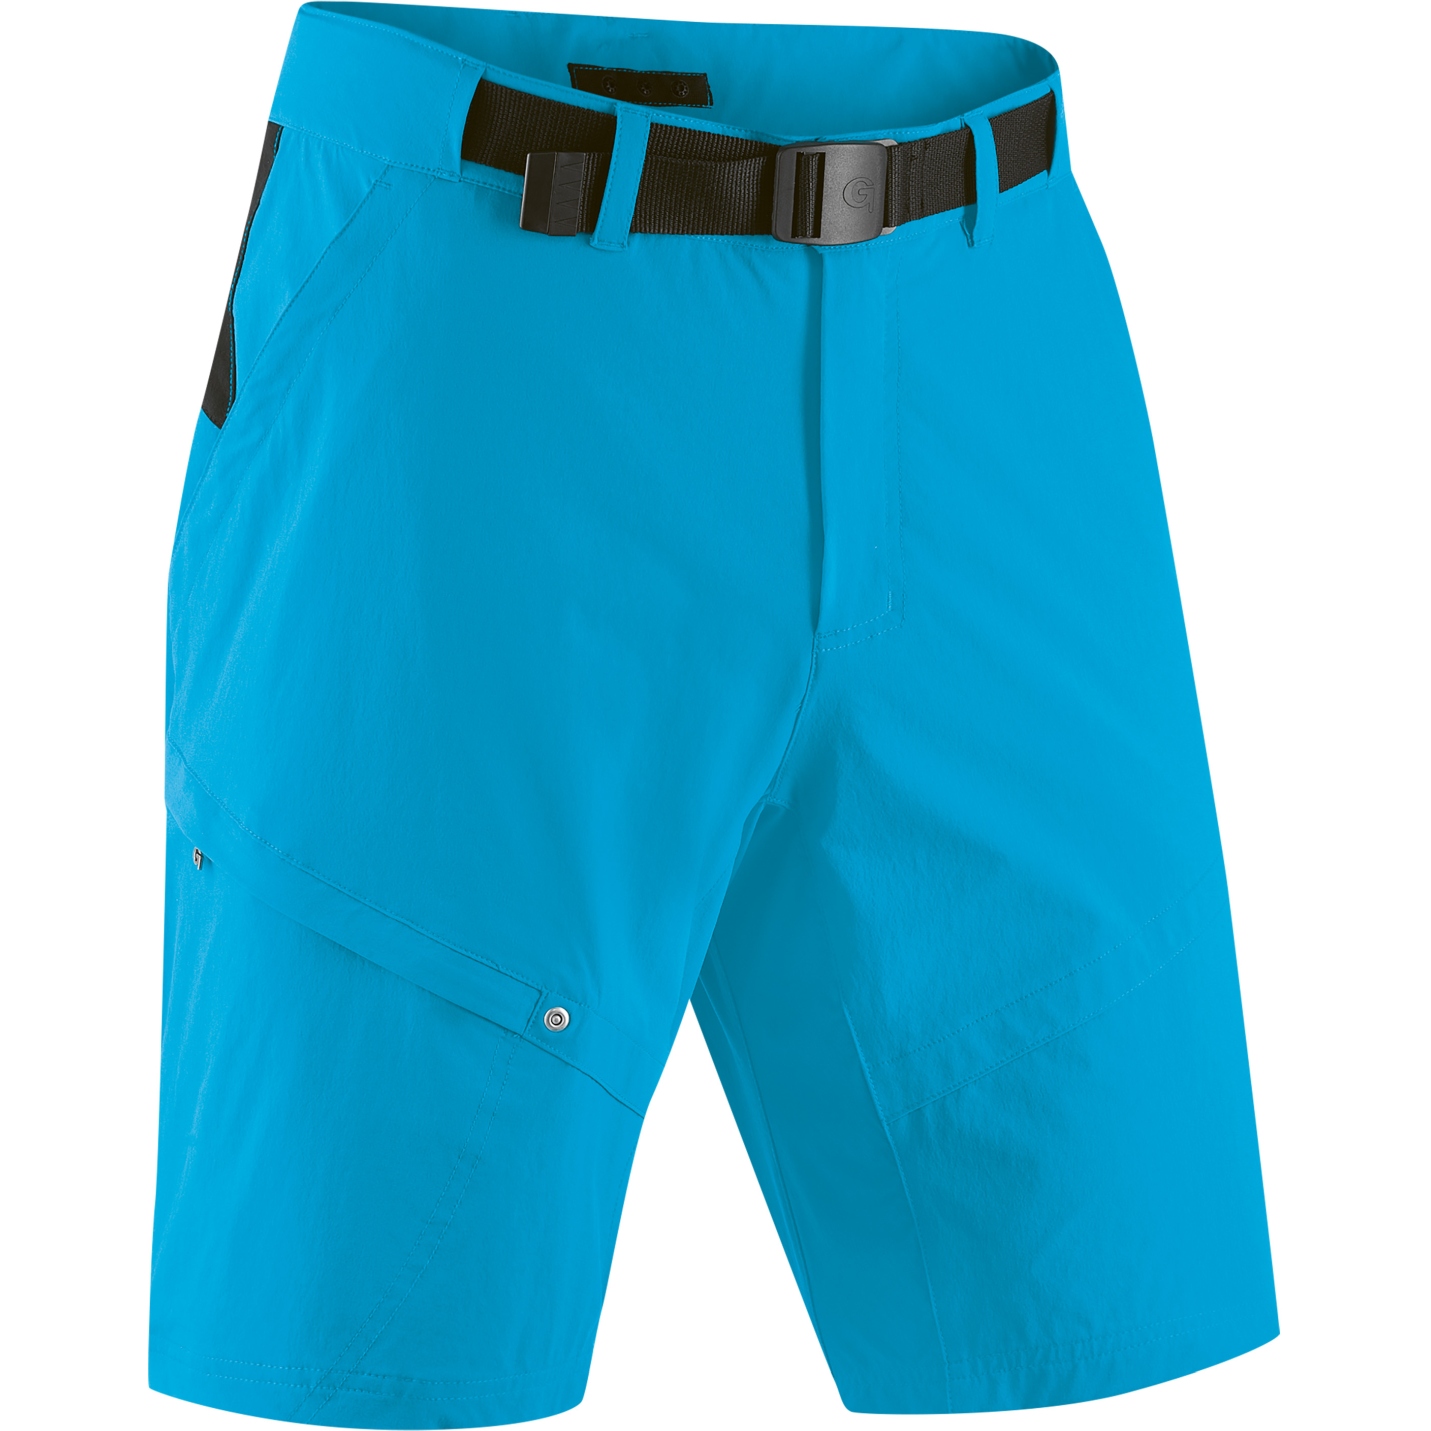 Produktbild von Gonso Arico Bike Shorts Herren 15030 - Hawaiian Ocean